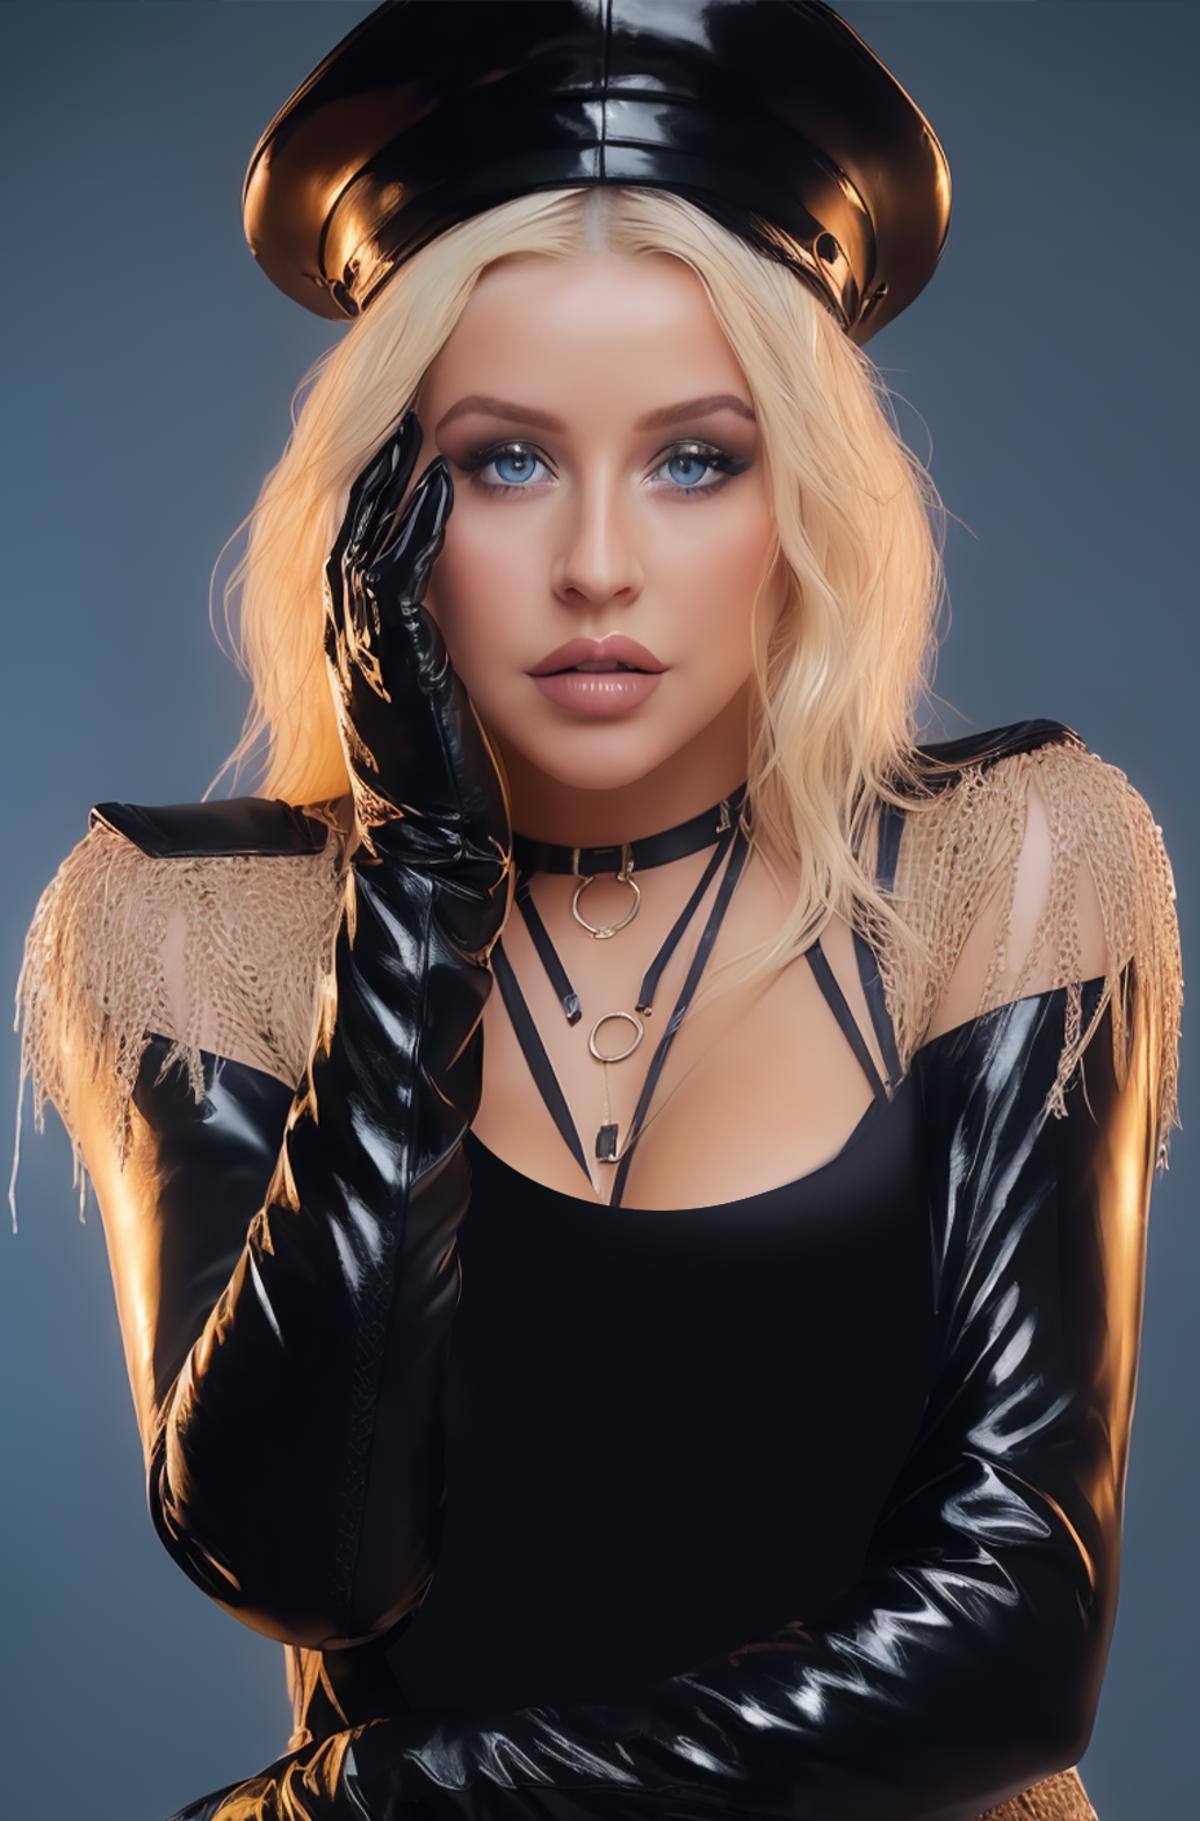 Christina Aguilera image by DiffusionDavinci